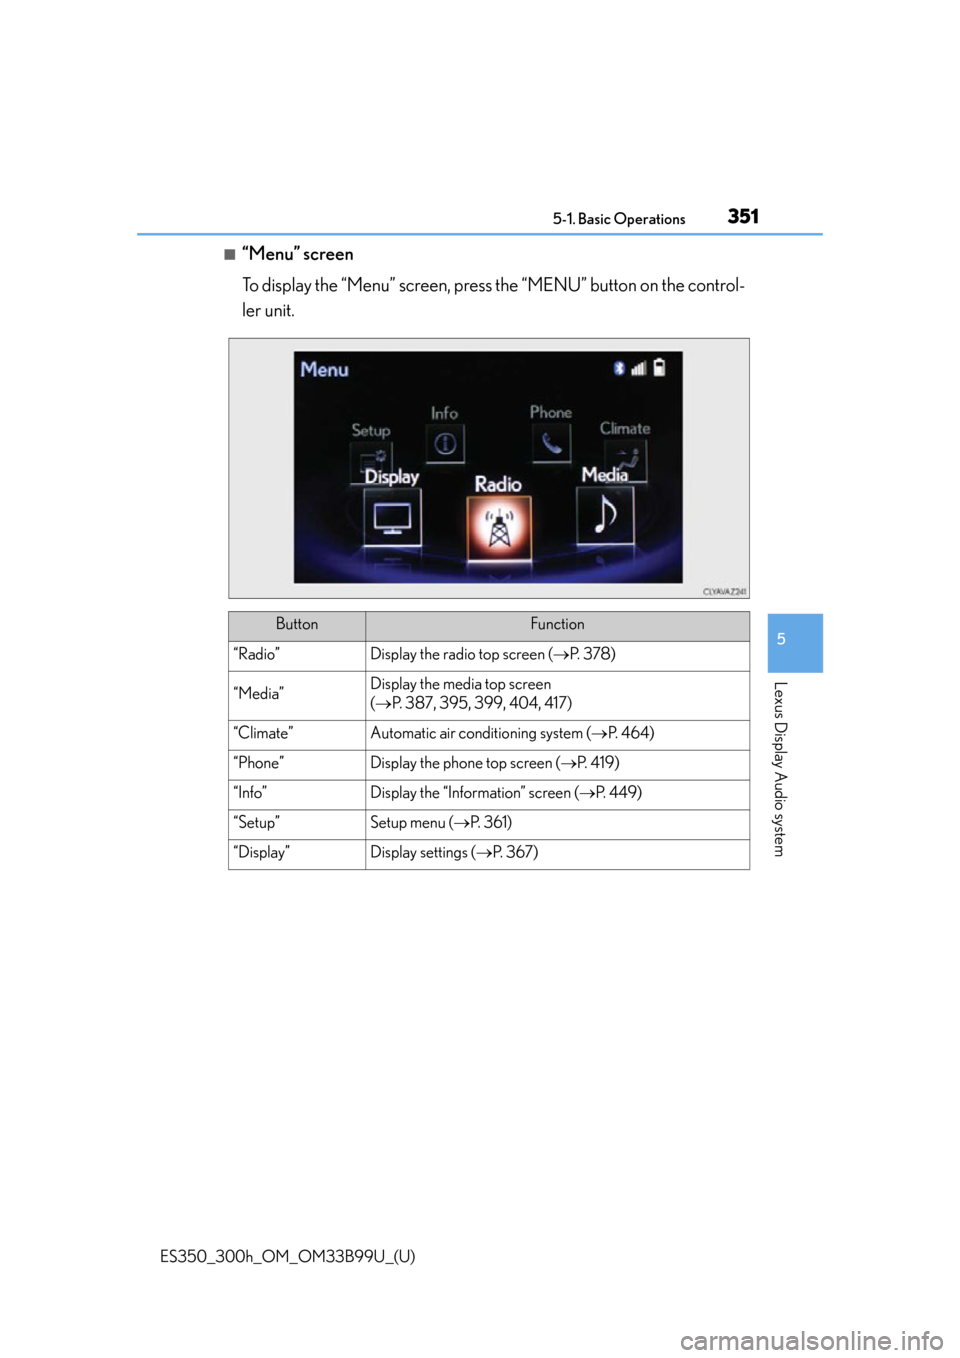 Lexus ES300h 2015  Do-it-yourself maintenance / Owners Manual (OM33B99U) ES350_300h_OM_OM33B99U_(U)
3515-1. Basic Operations
5
Lexus Display Audio system
■“Menu” screen
To display the “Menu” screen, press the “MENU” button on the control-
ler unit.
ButtonFunc